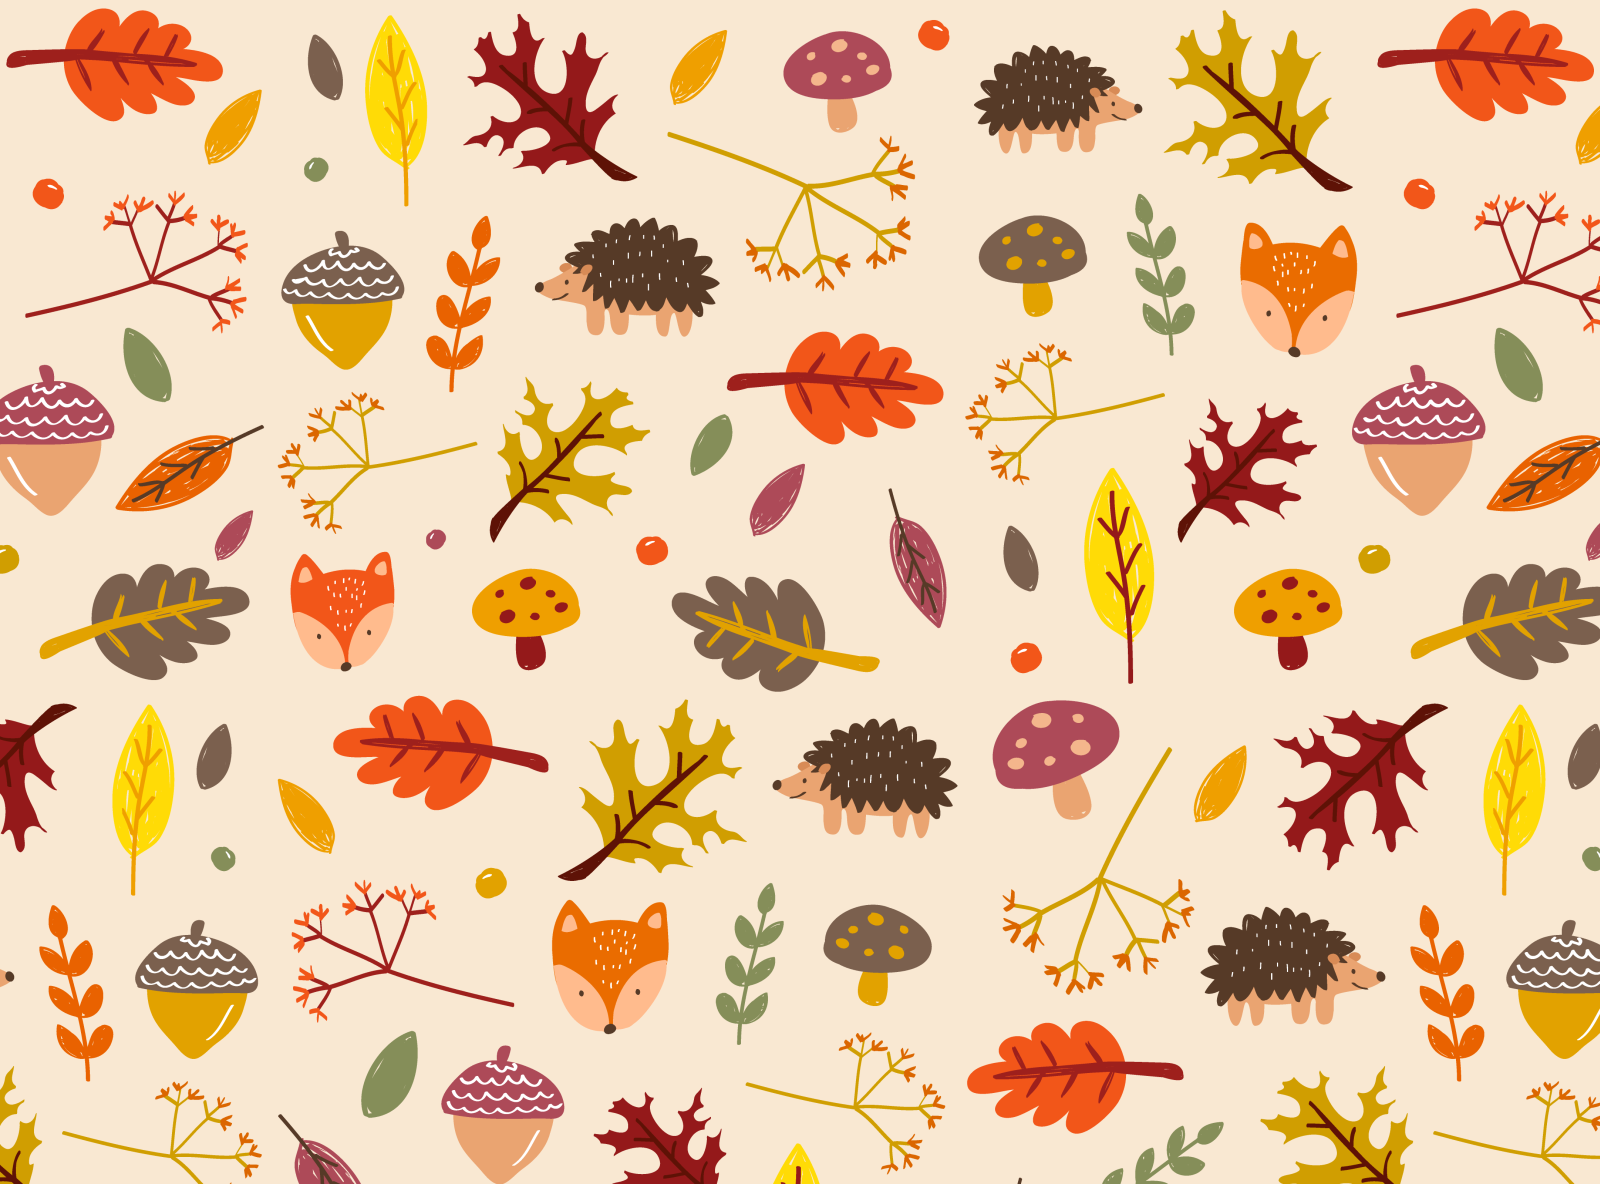 Autumn Pattern by Victoria Valdez on Dribbble